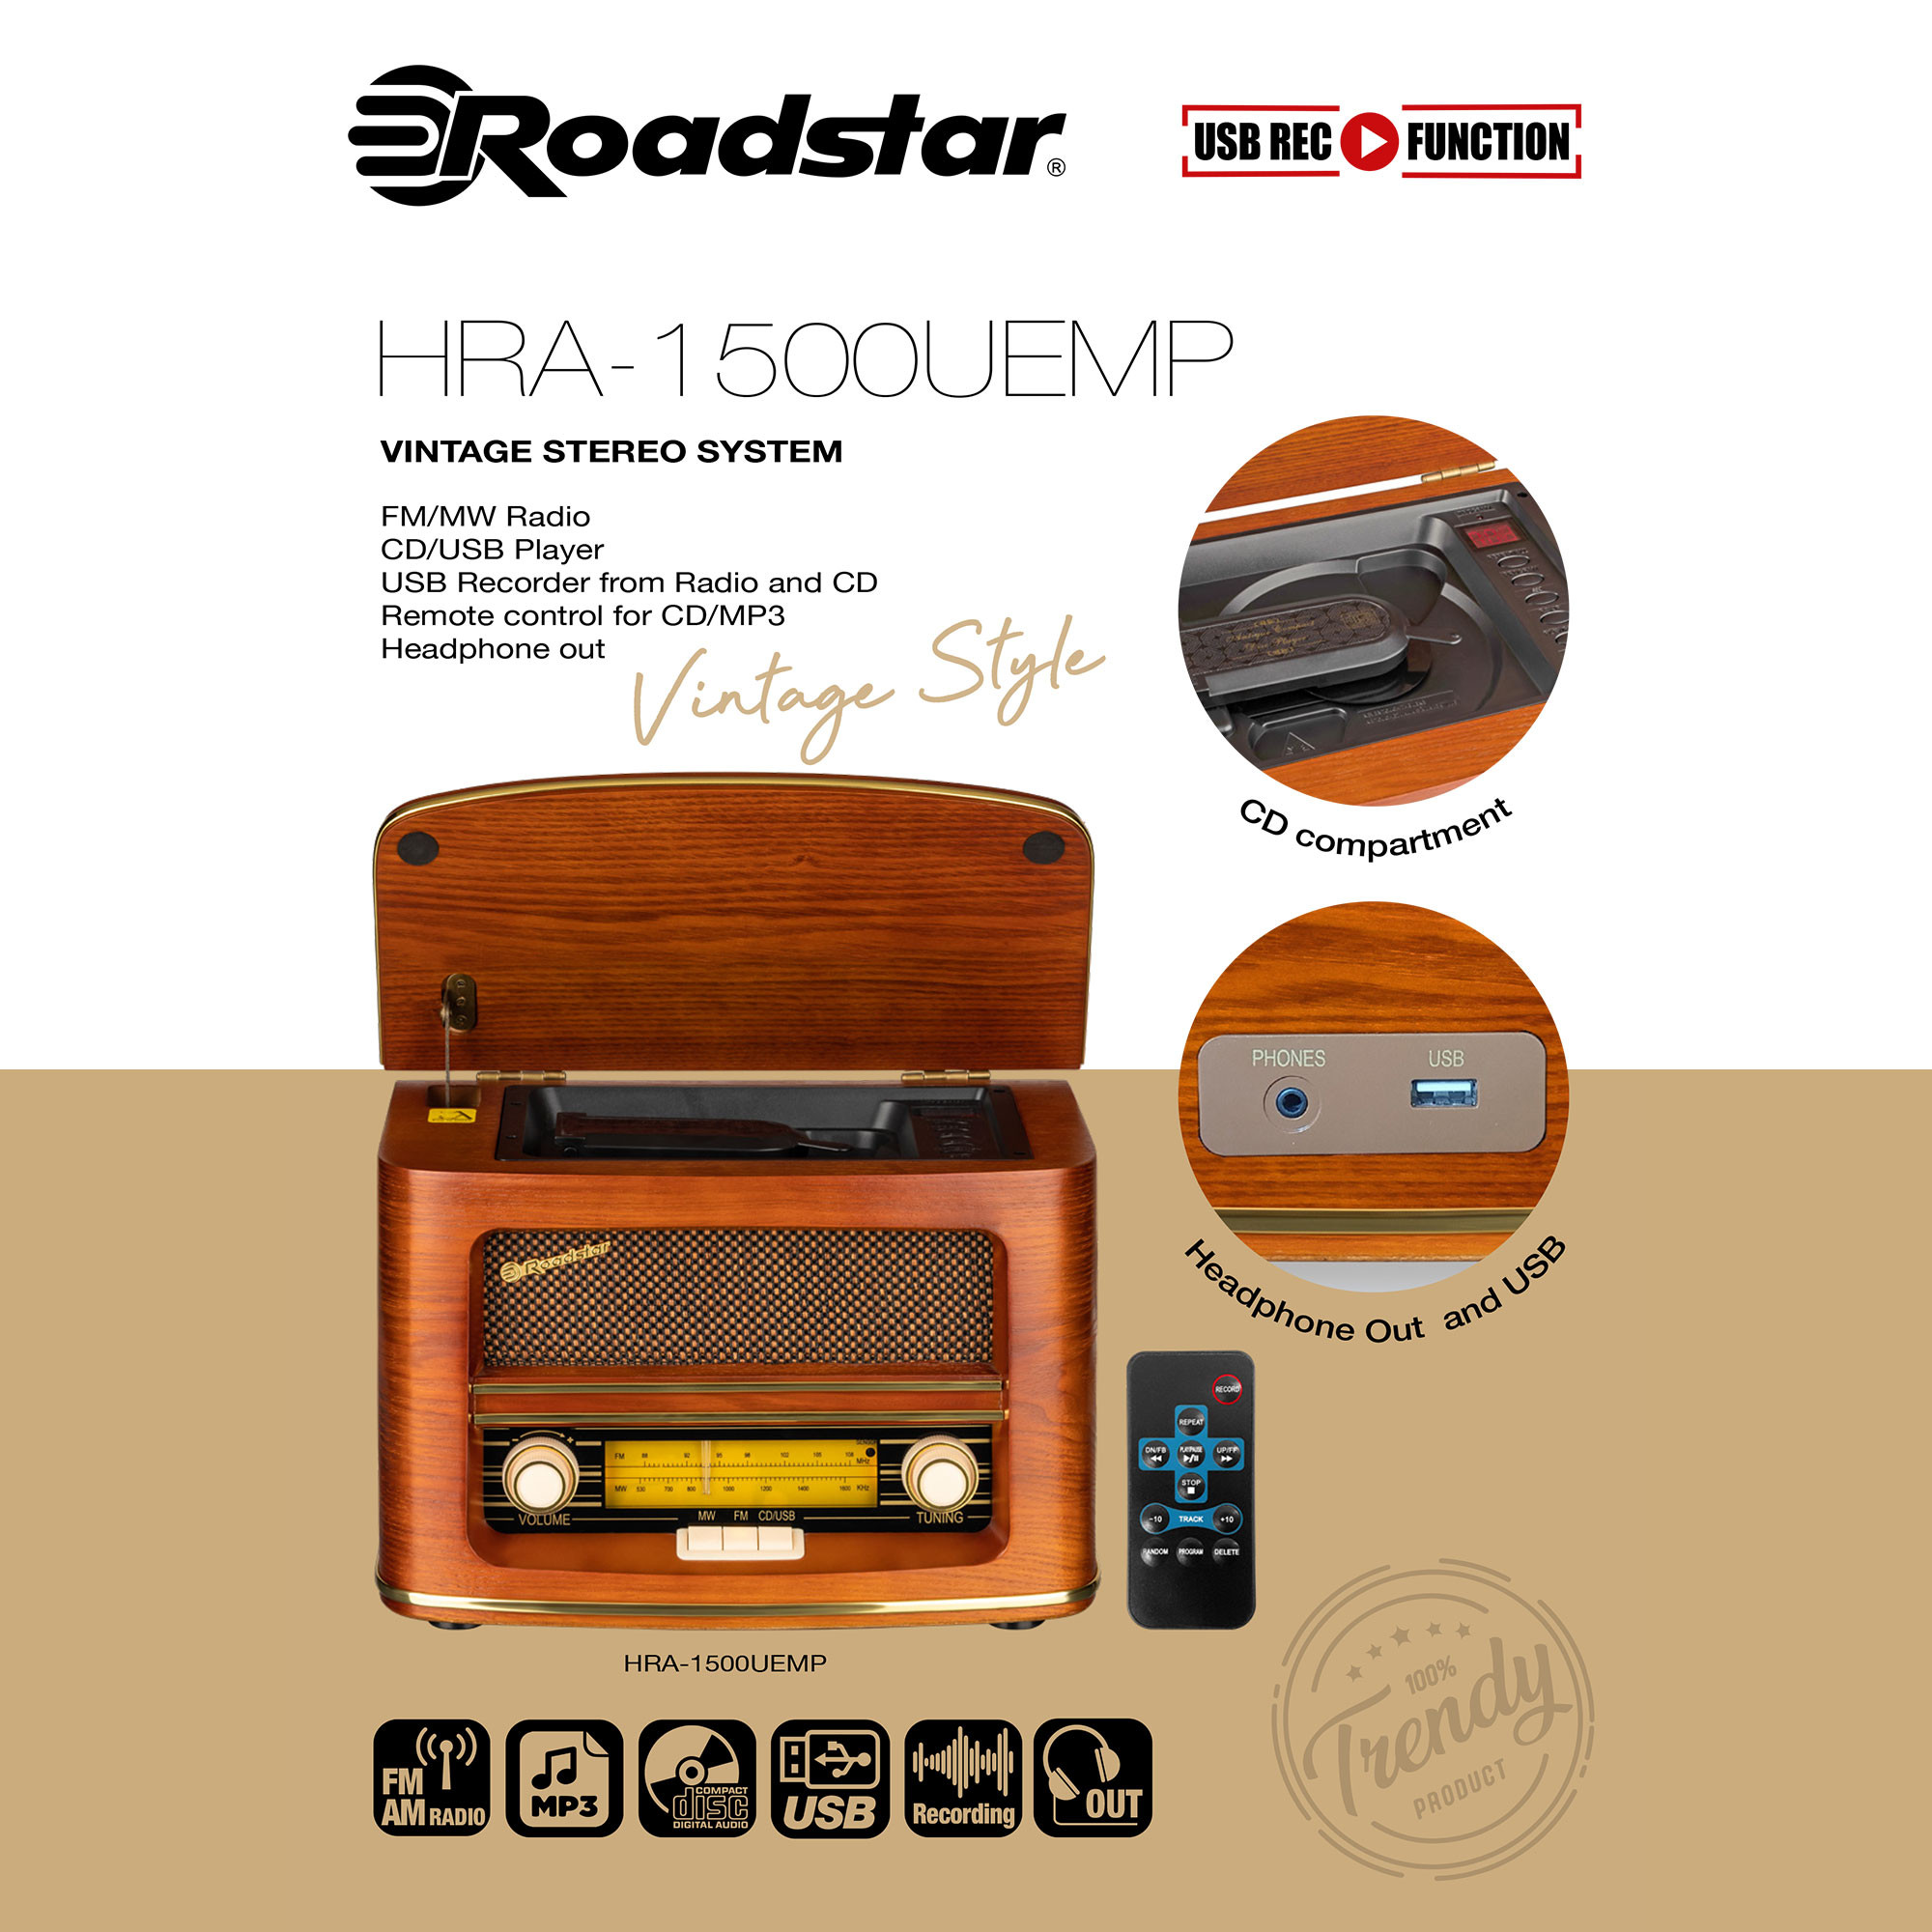 Roadstar RCR-779D+/BK Radio Cassette con CD Portátil DAB / DAB+ / FM,  Reproductor CD-MP3, USB, Mando a Distancia, AUX-IN, Salida de Auriculares,  Negro